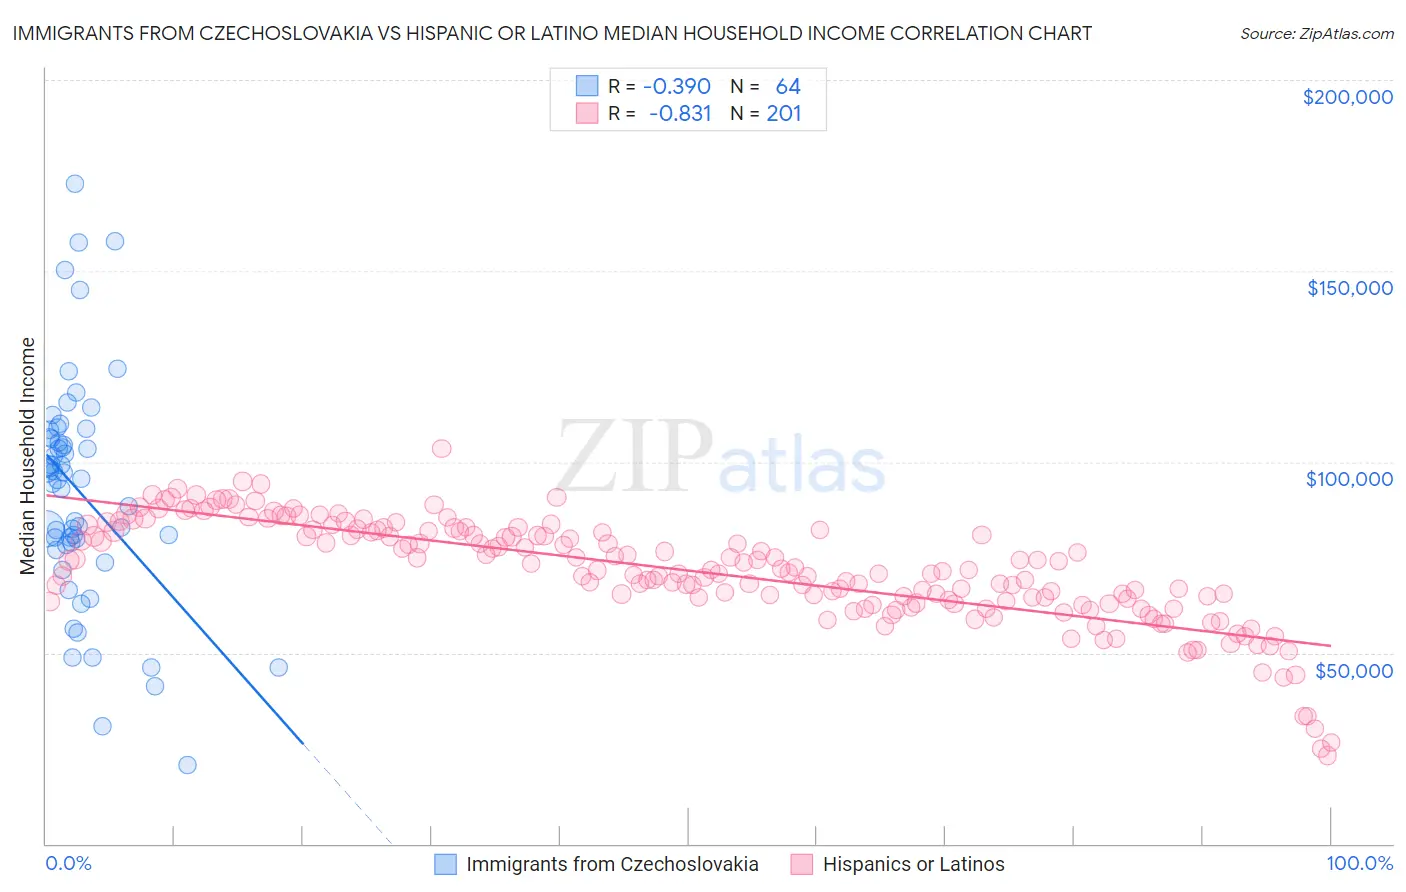 Immigrants from Czechoslovakia vs Hispanic or Latino Median Household Income